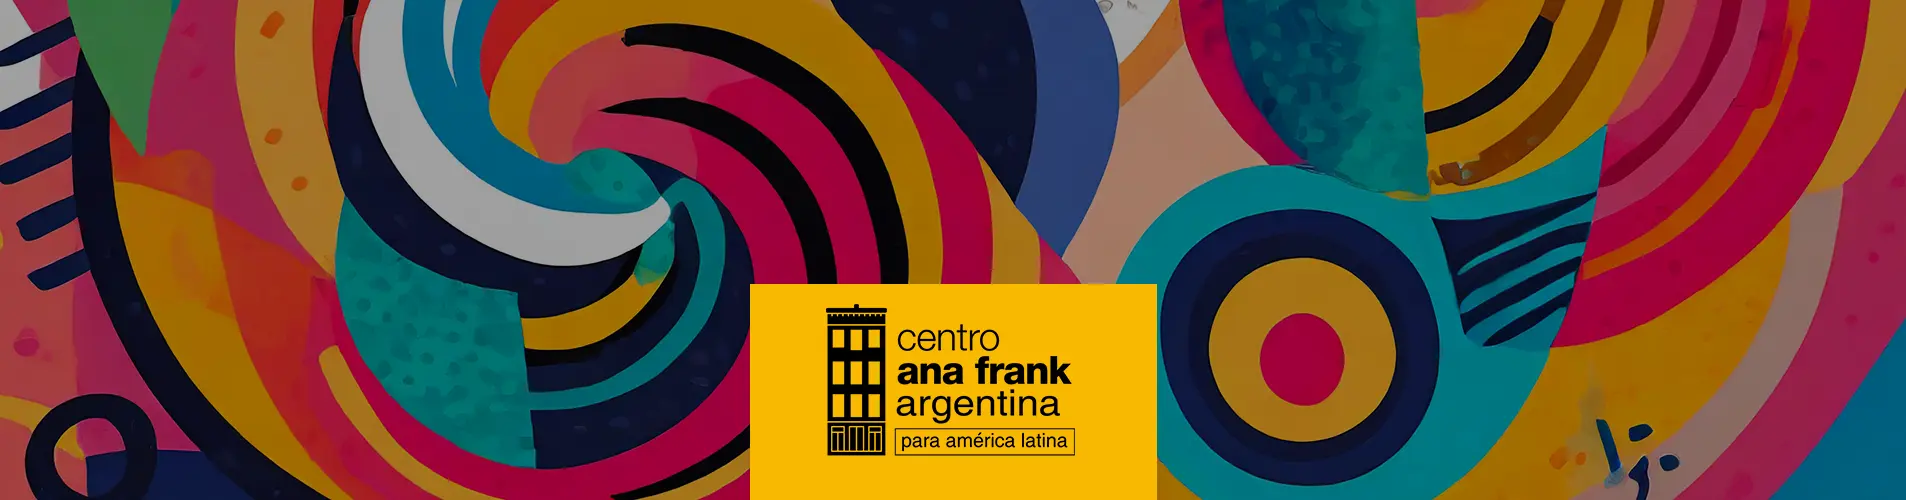 Acto de reinauguración | 15° Aniversario del Centro Ana Frank